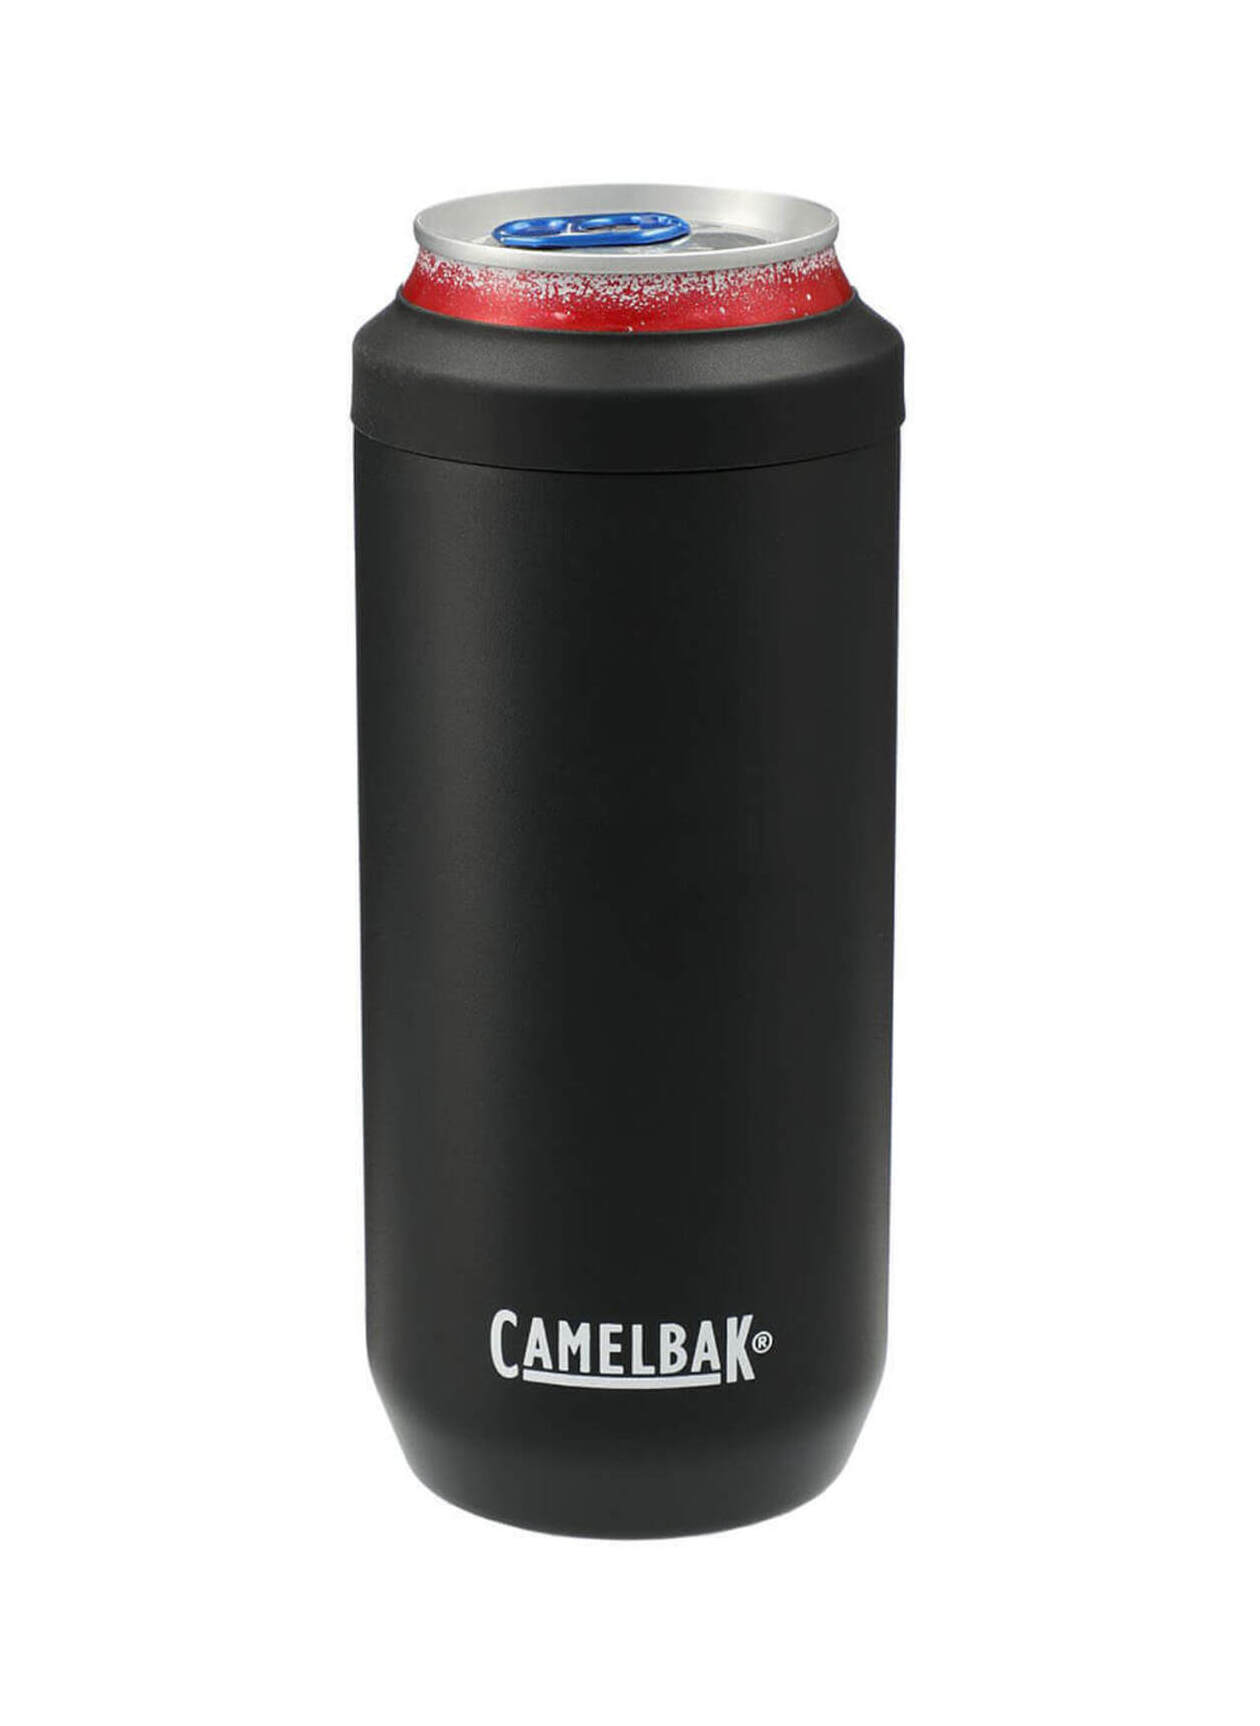 CamelBak Black Slim Can Cooler 12 oz